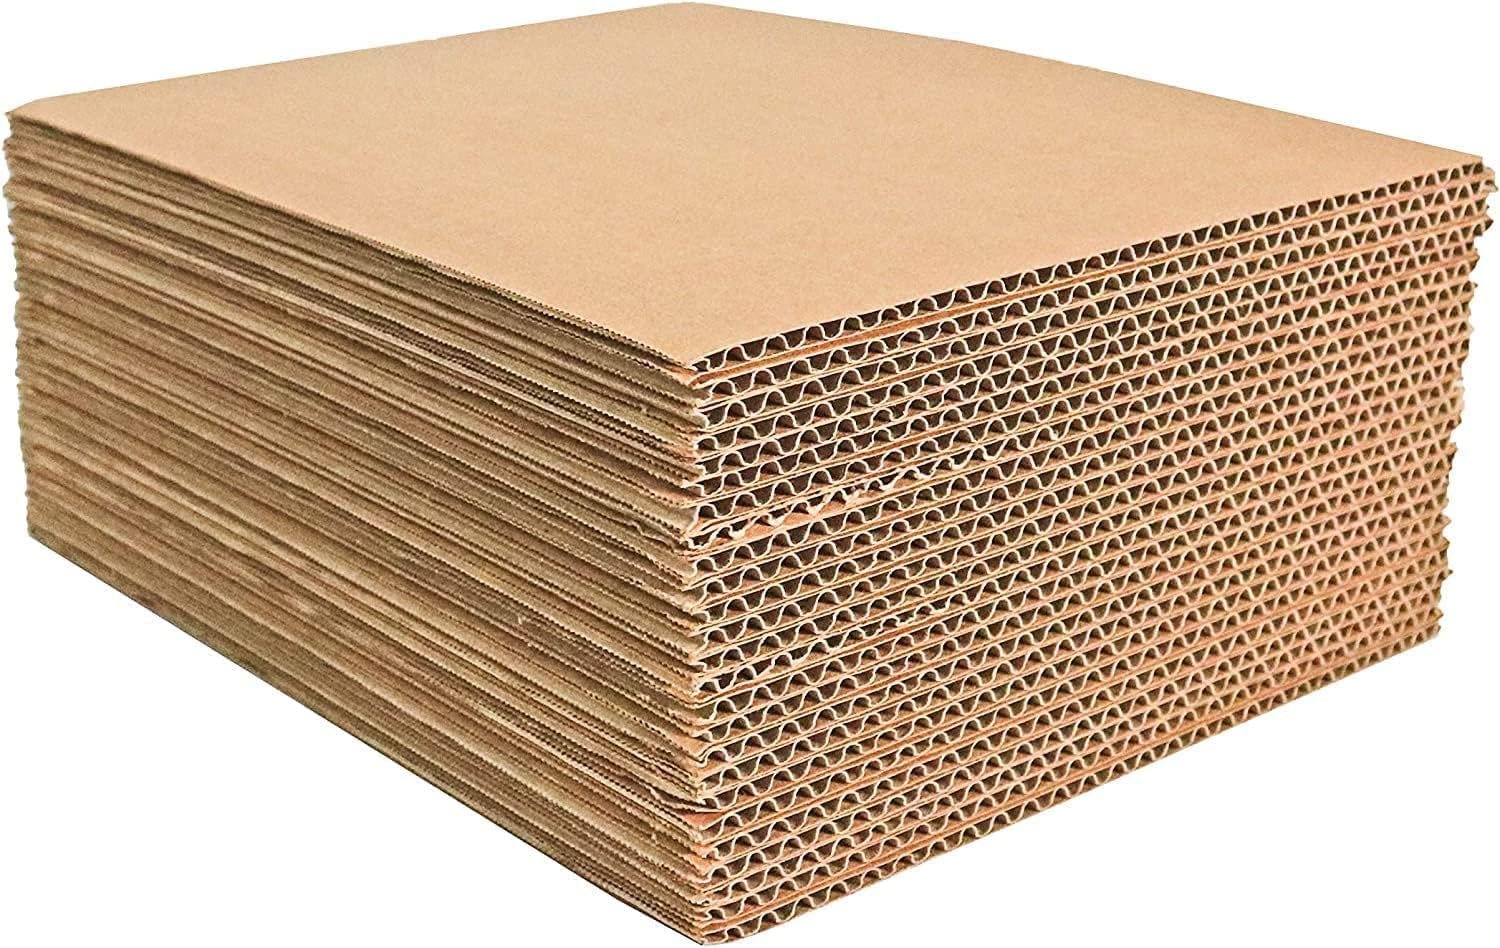 200 12.25x12.25 LP Cardboard Corrugated Pads Inserts Filler Sheet 12.25 x 12.25